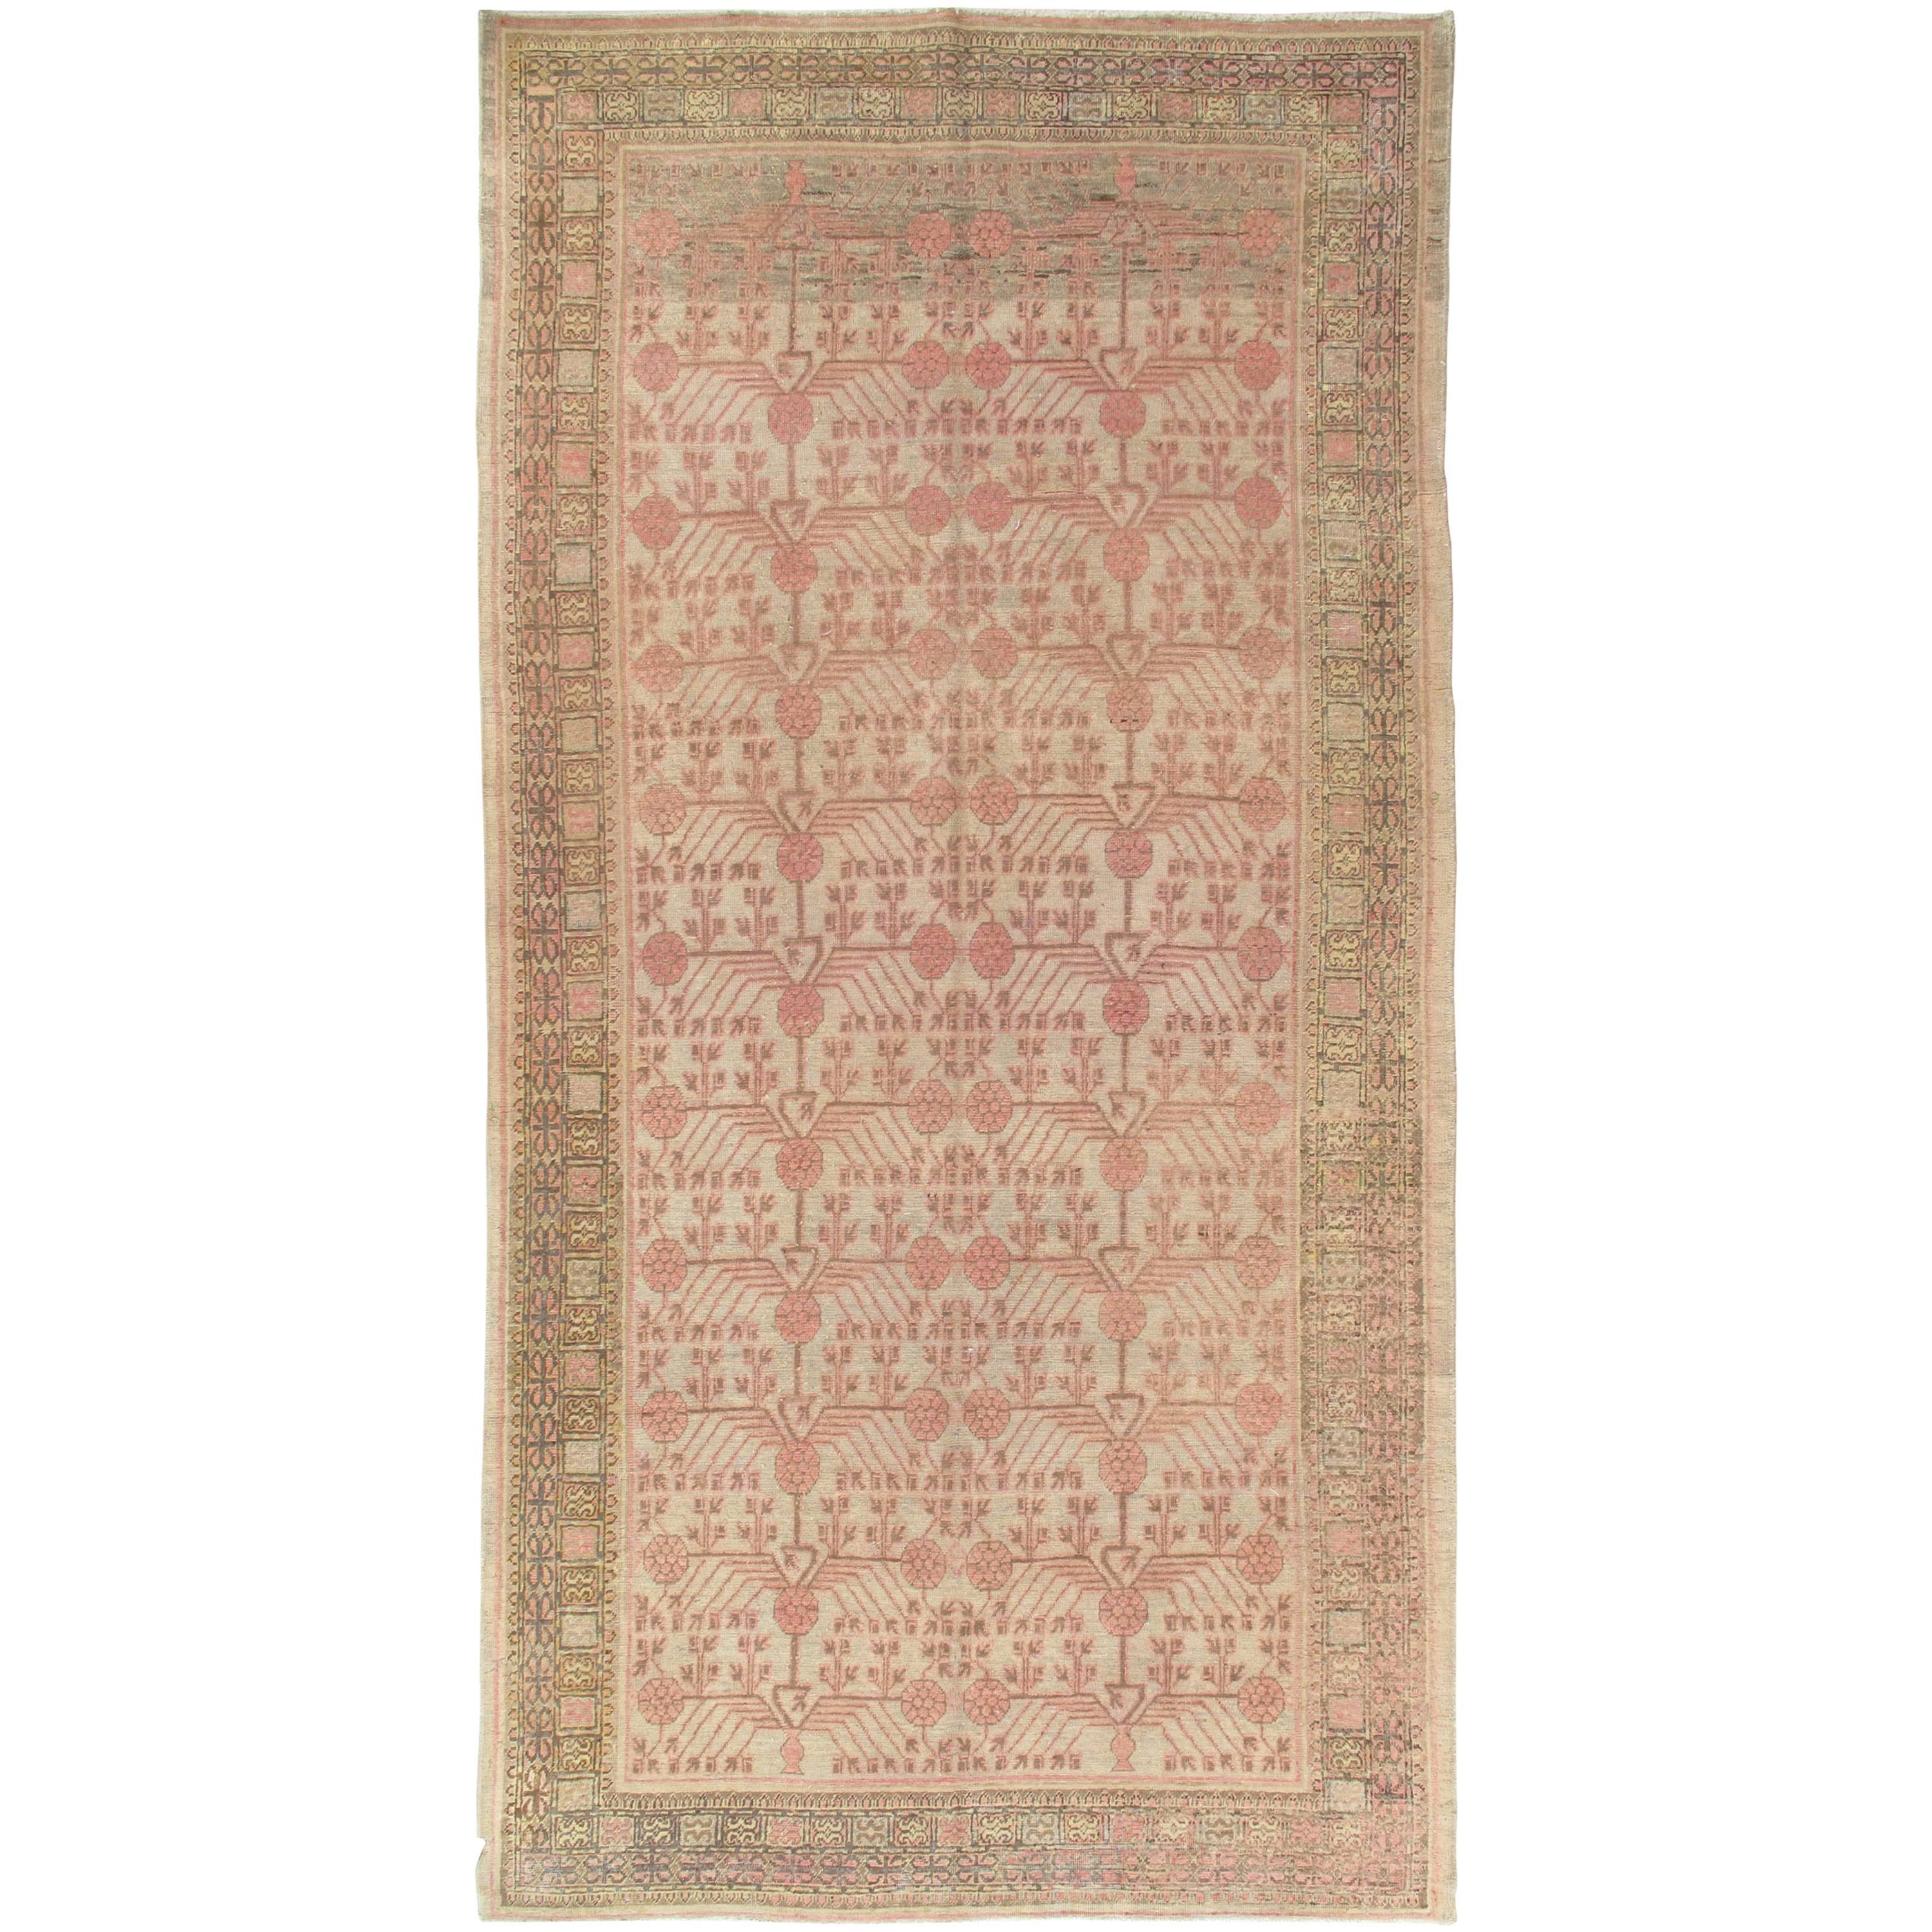 Antique Khotan Rug, Deco Handmade Oriental Rug, Brown and Pink Rug